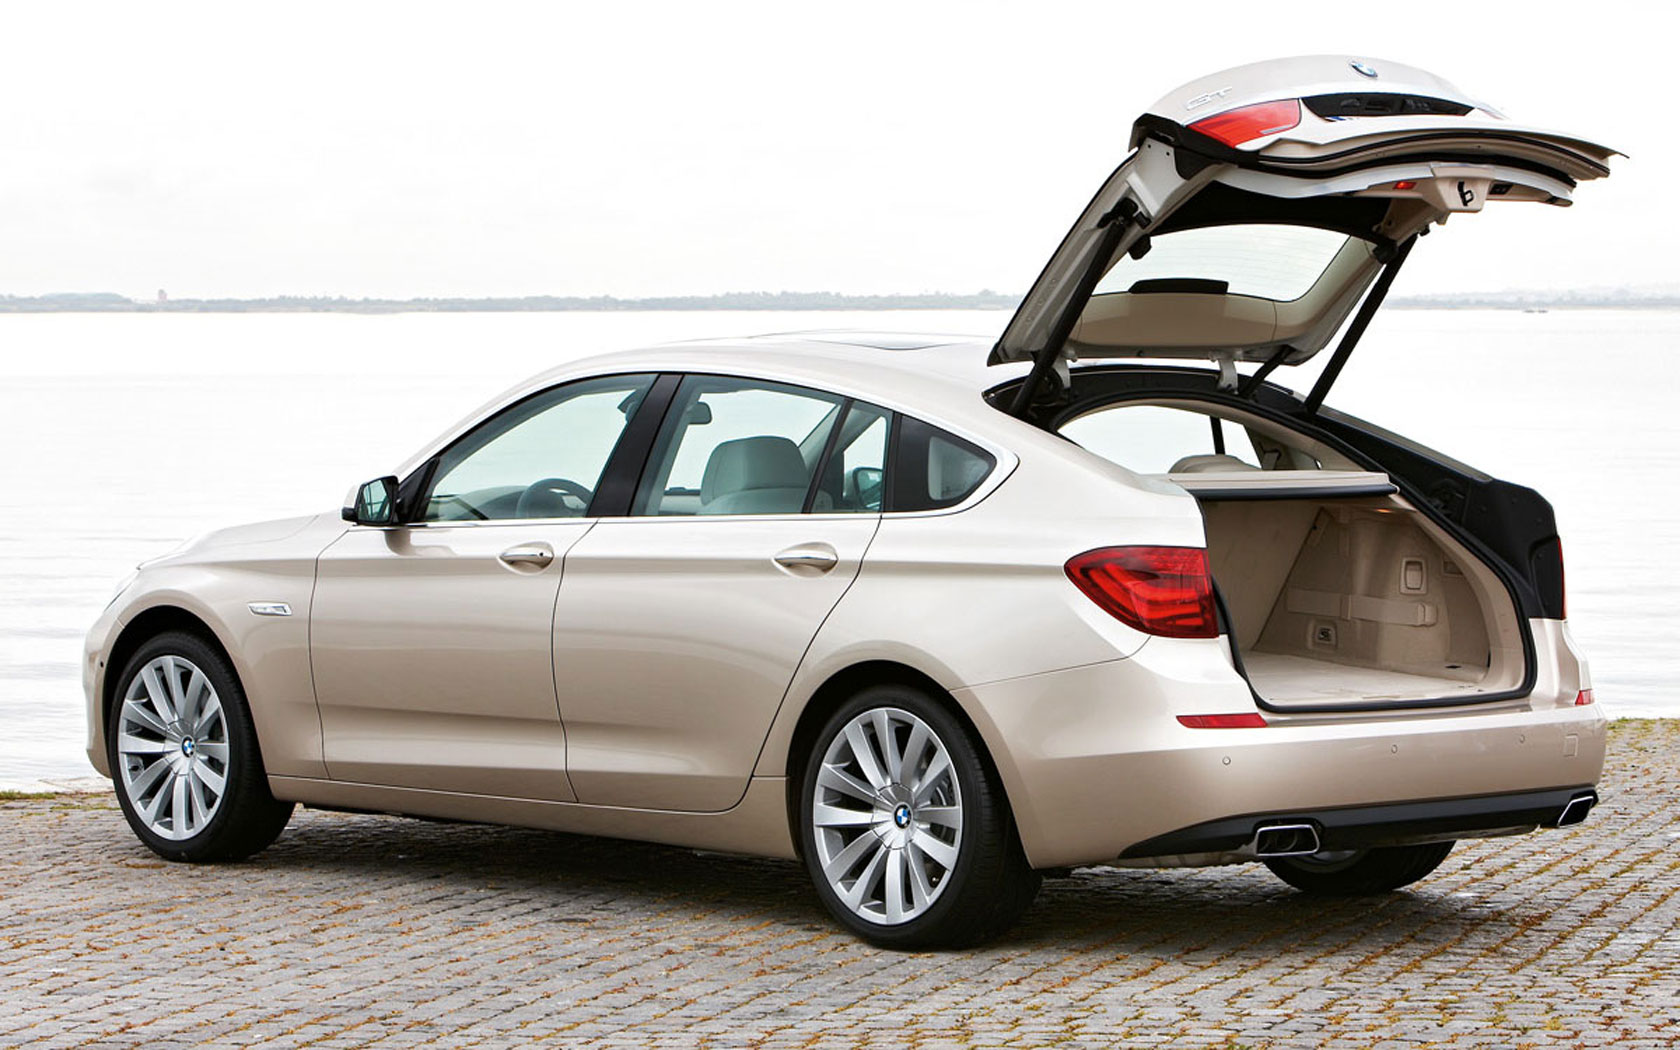  BMW 5-series Gran Turismo (2010-2013)